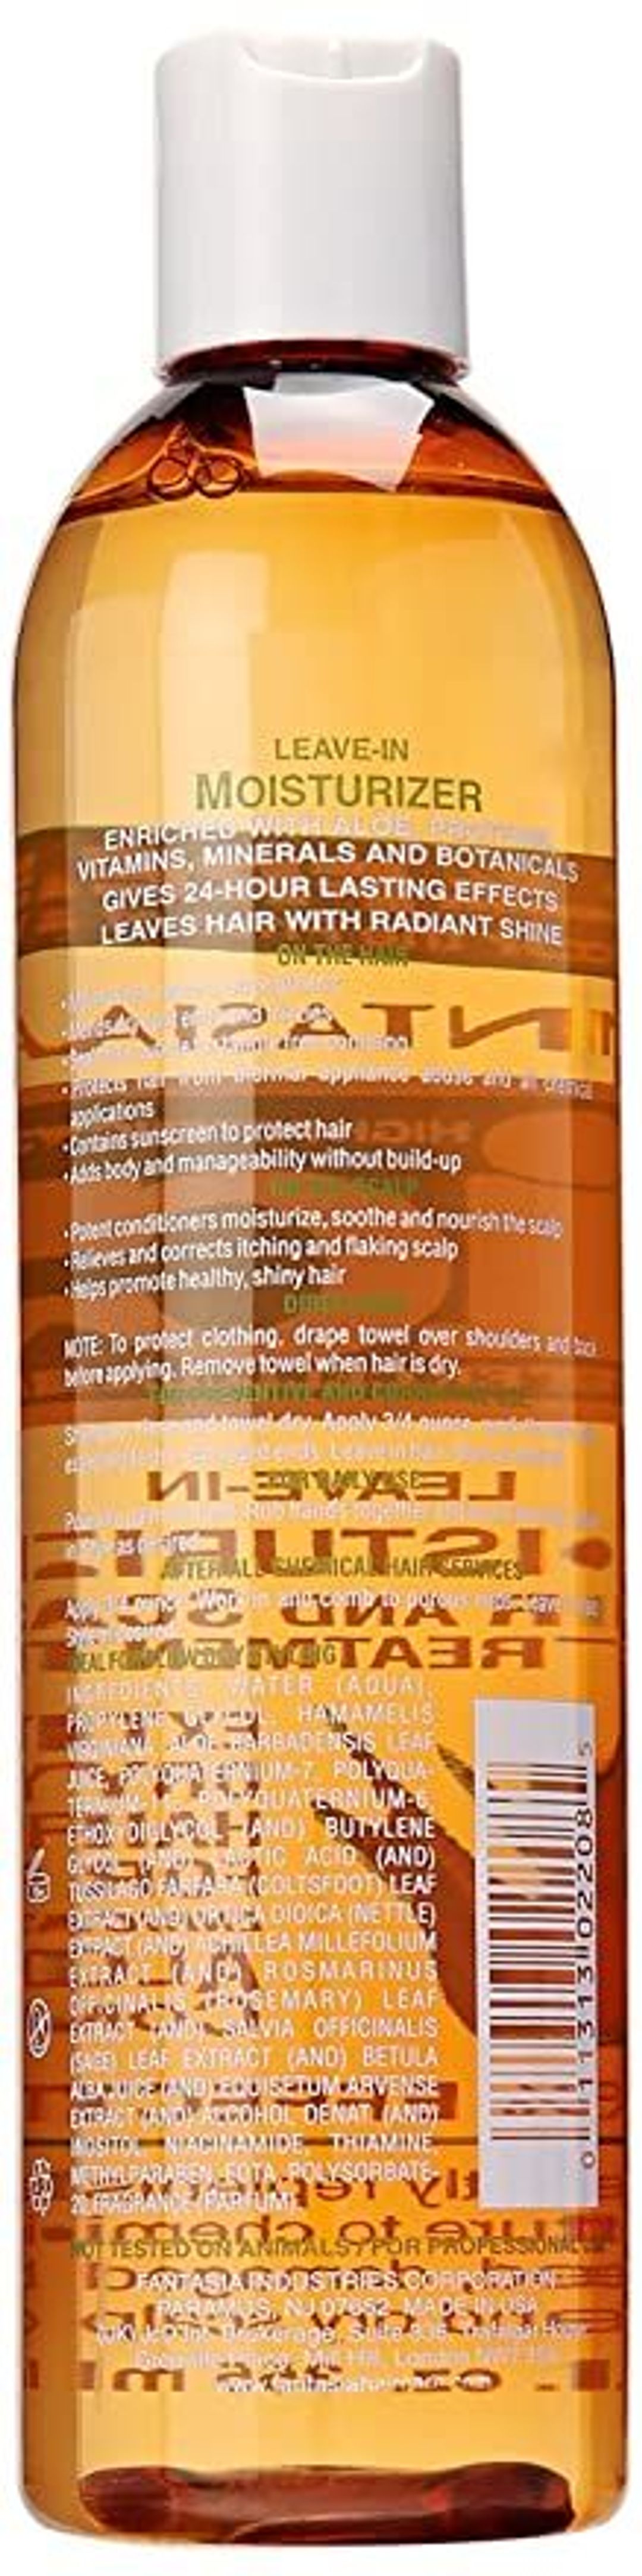 IC Fantasia Leave-in Moisturizer Hair & Scalp Treatment With Aloe Complex - 12oz